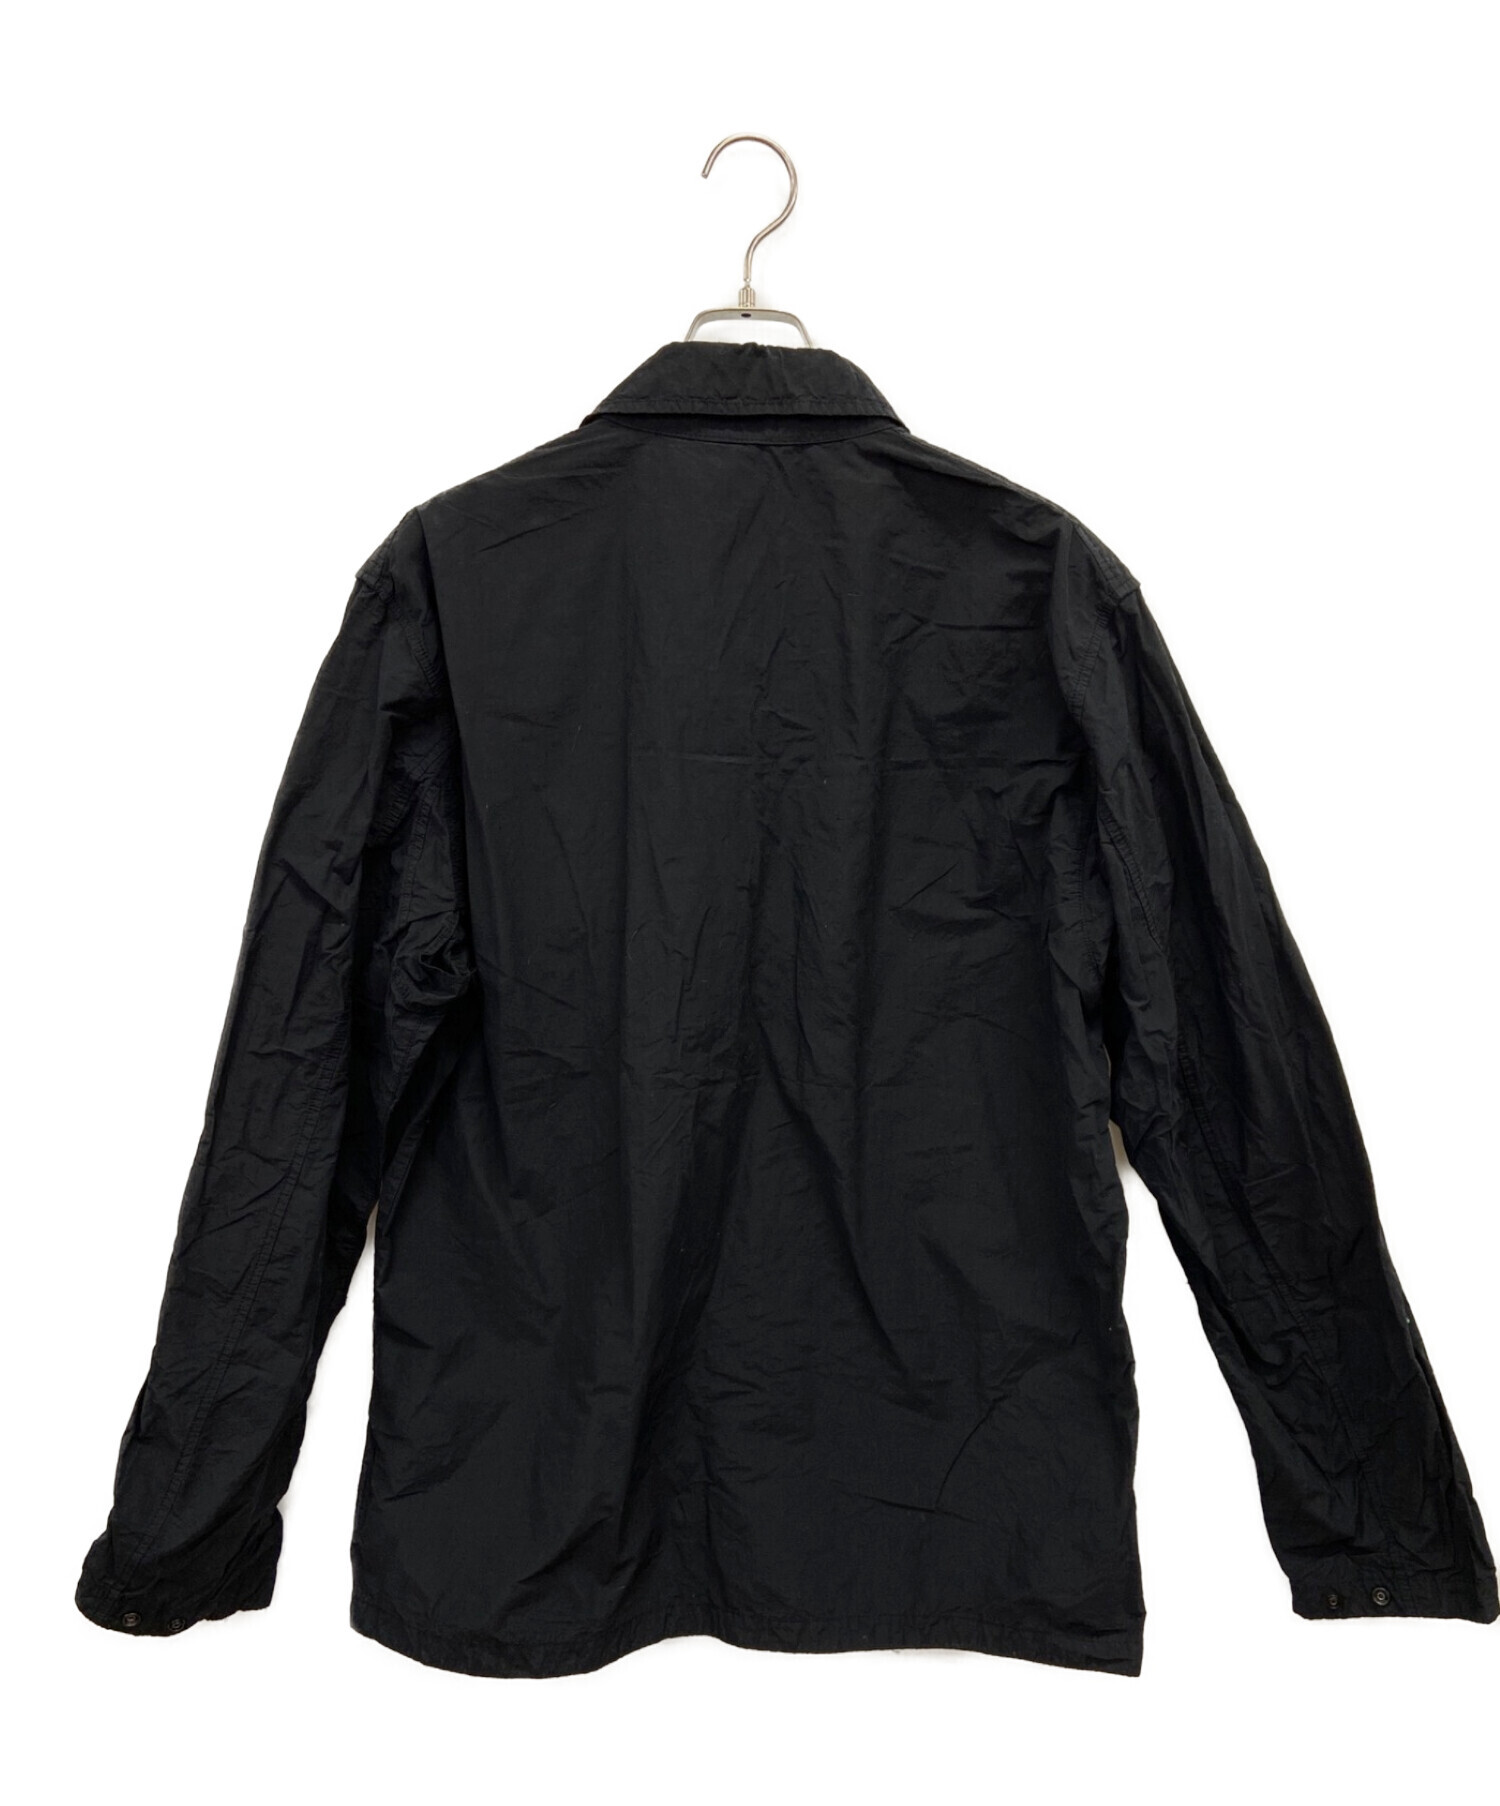 STONE ISLAND (ストーンアイランド) ナイロンジップジャケット ブラック サイズ:Xl